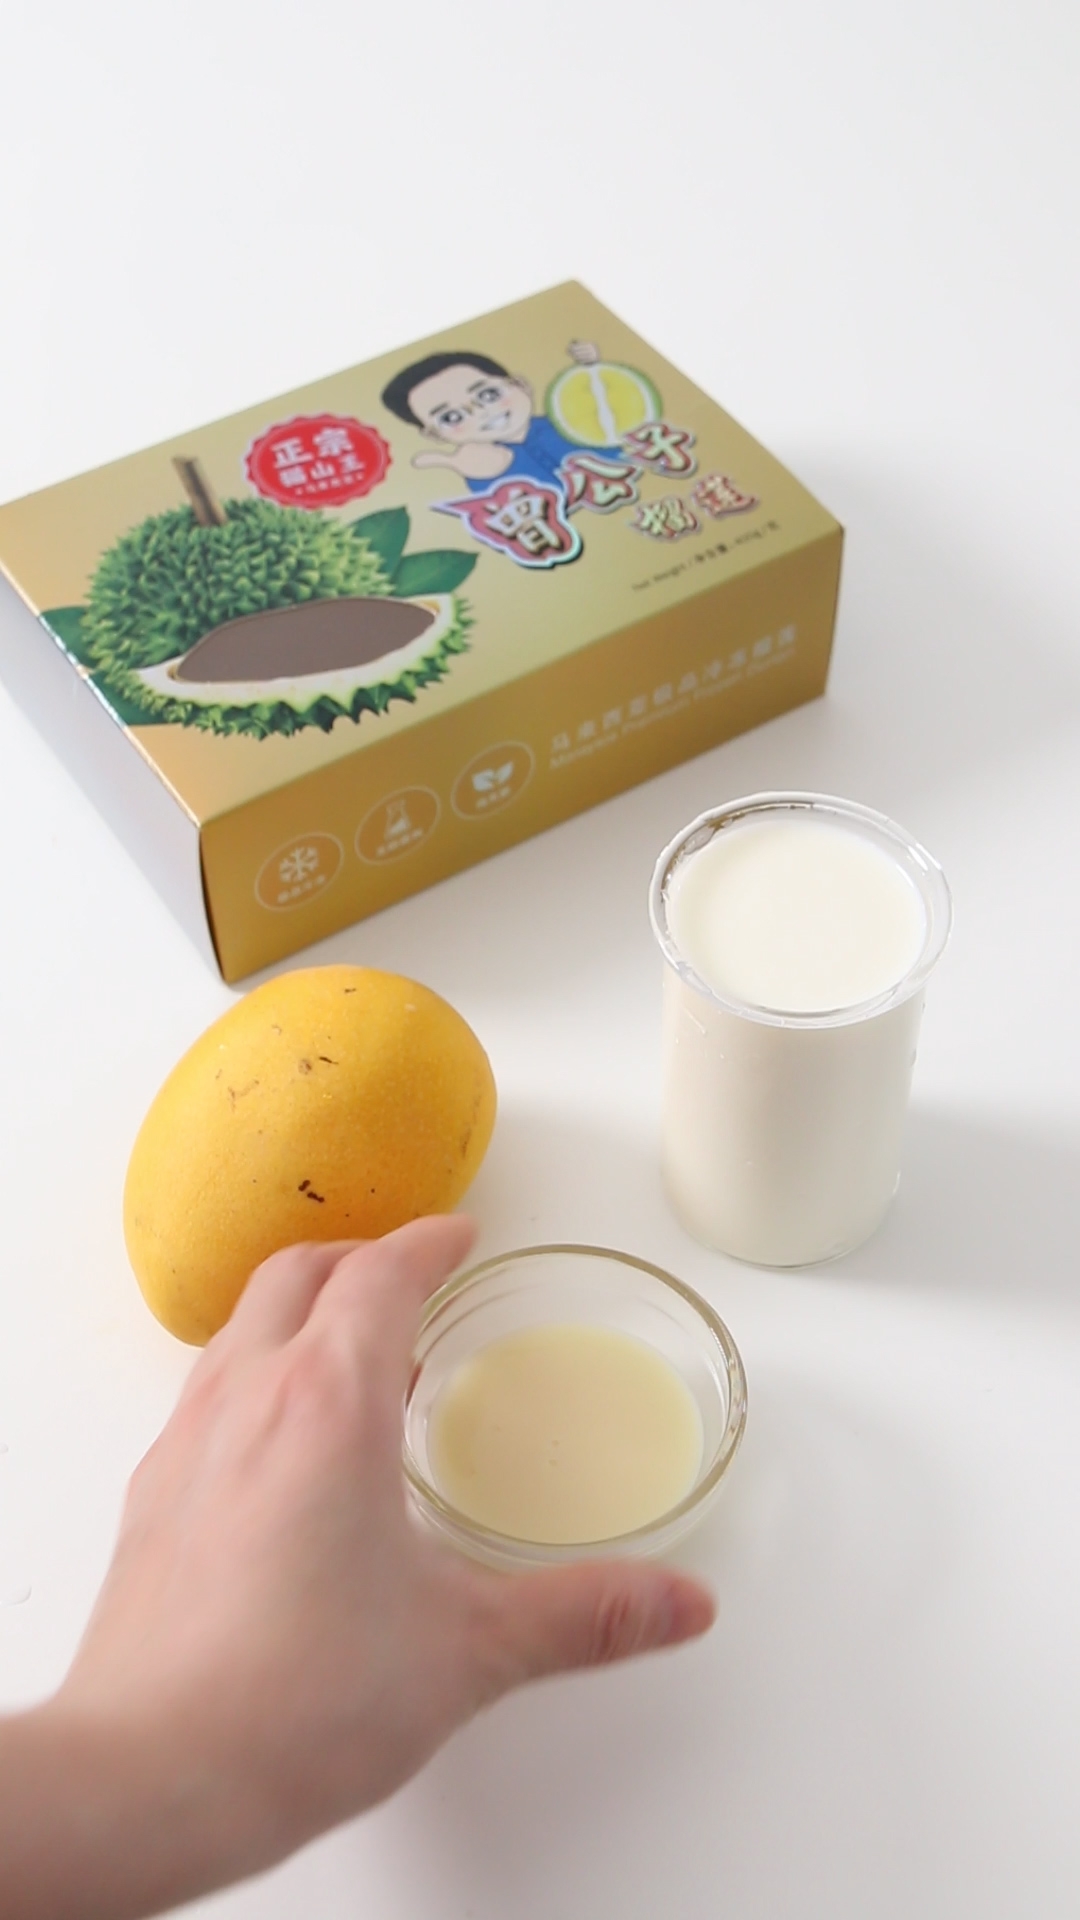 Durian Milkshake recipe